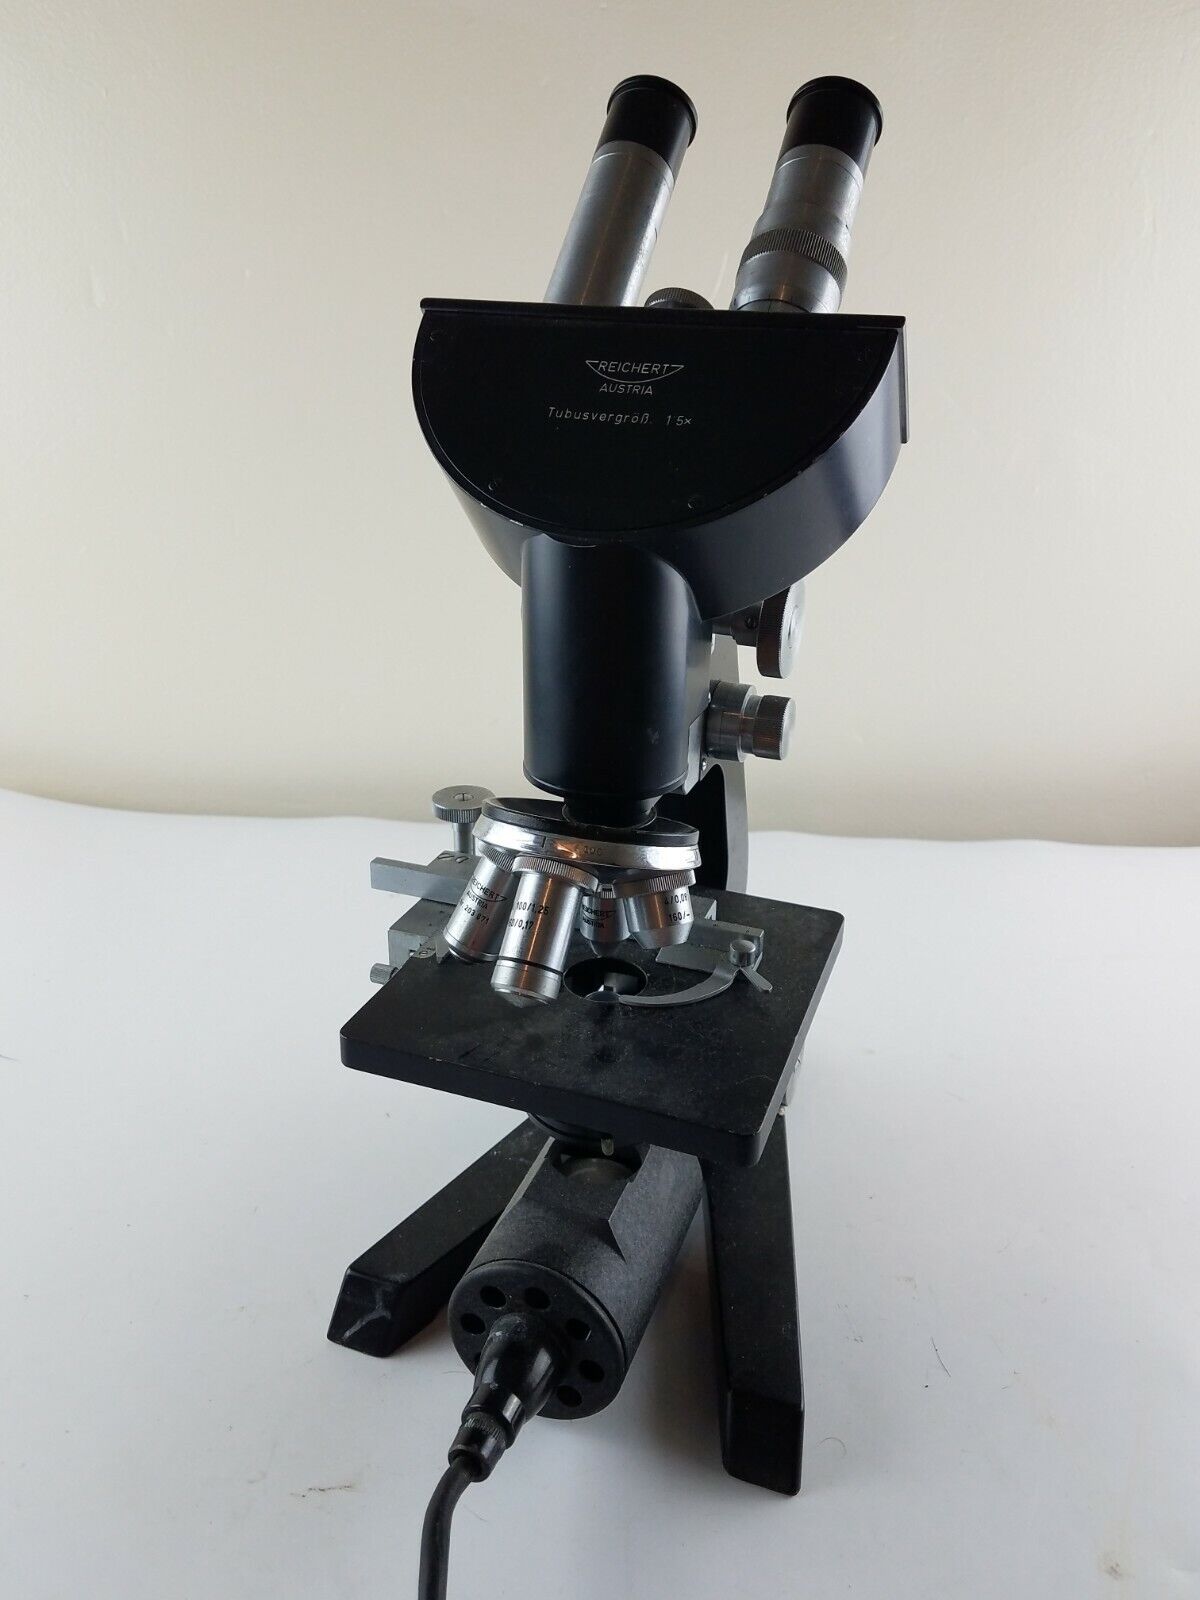 Vintage Reichert Microscope 4 Lenses 1.5x Made in Austria